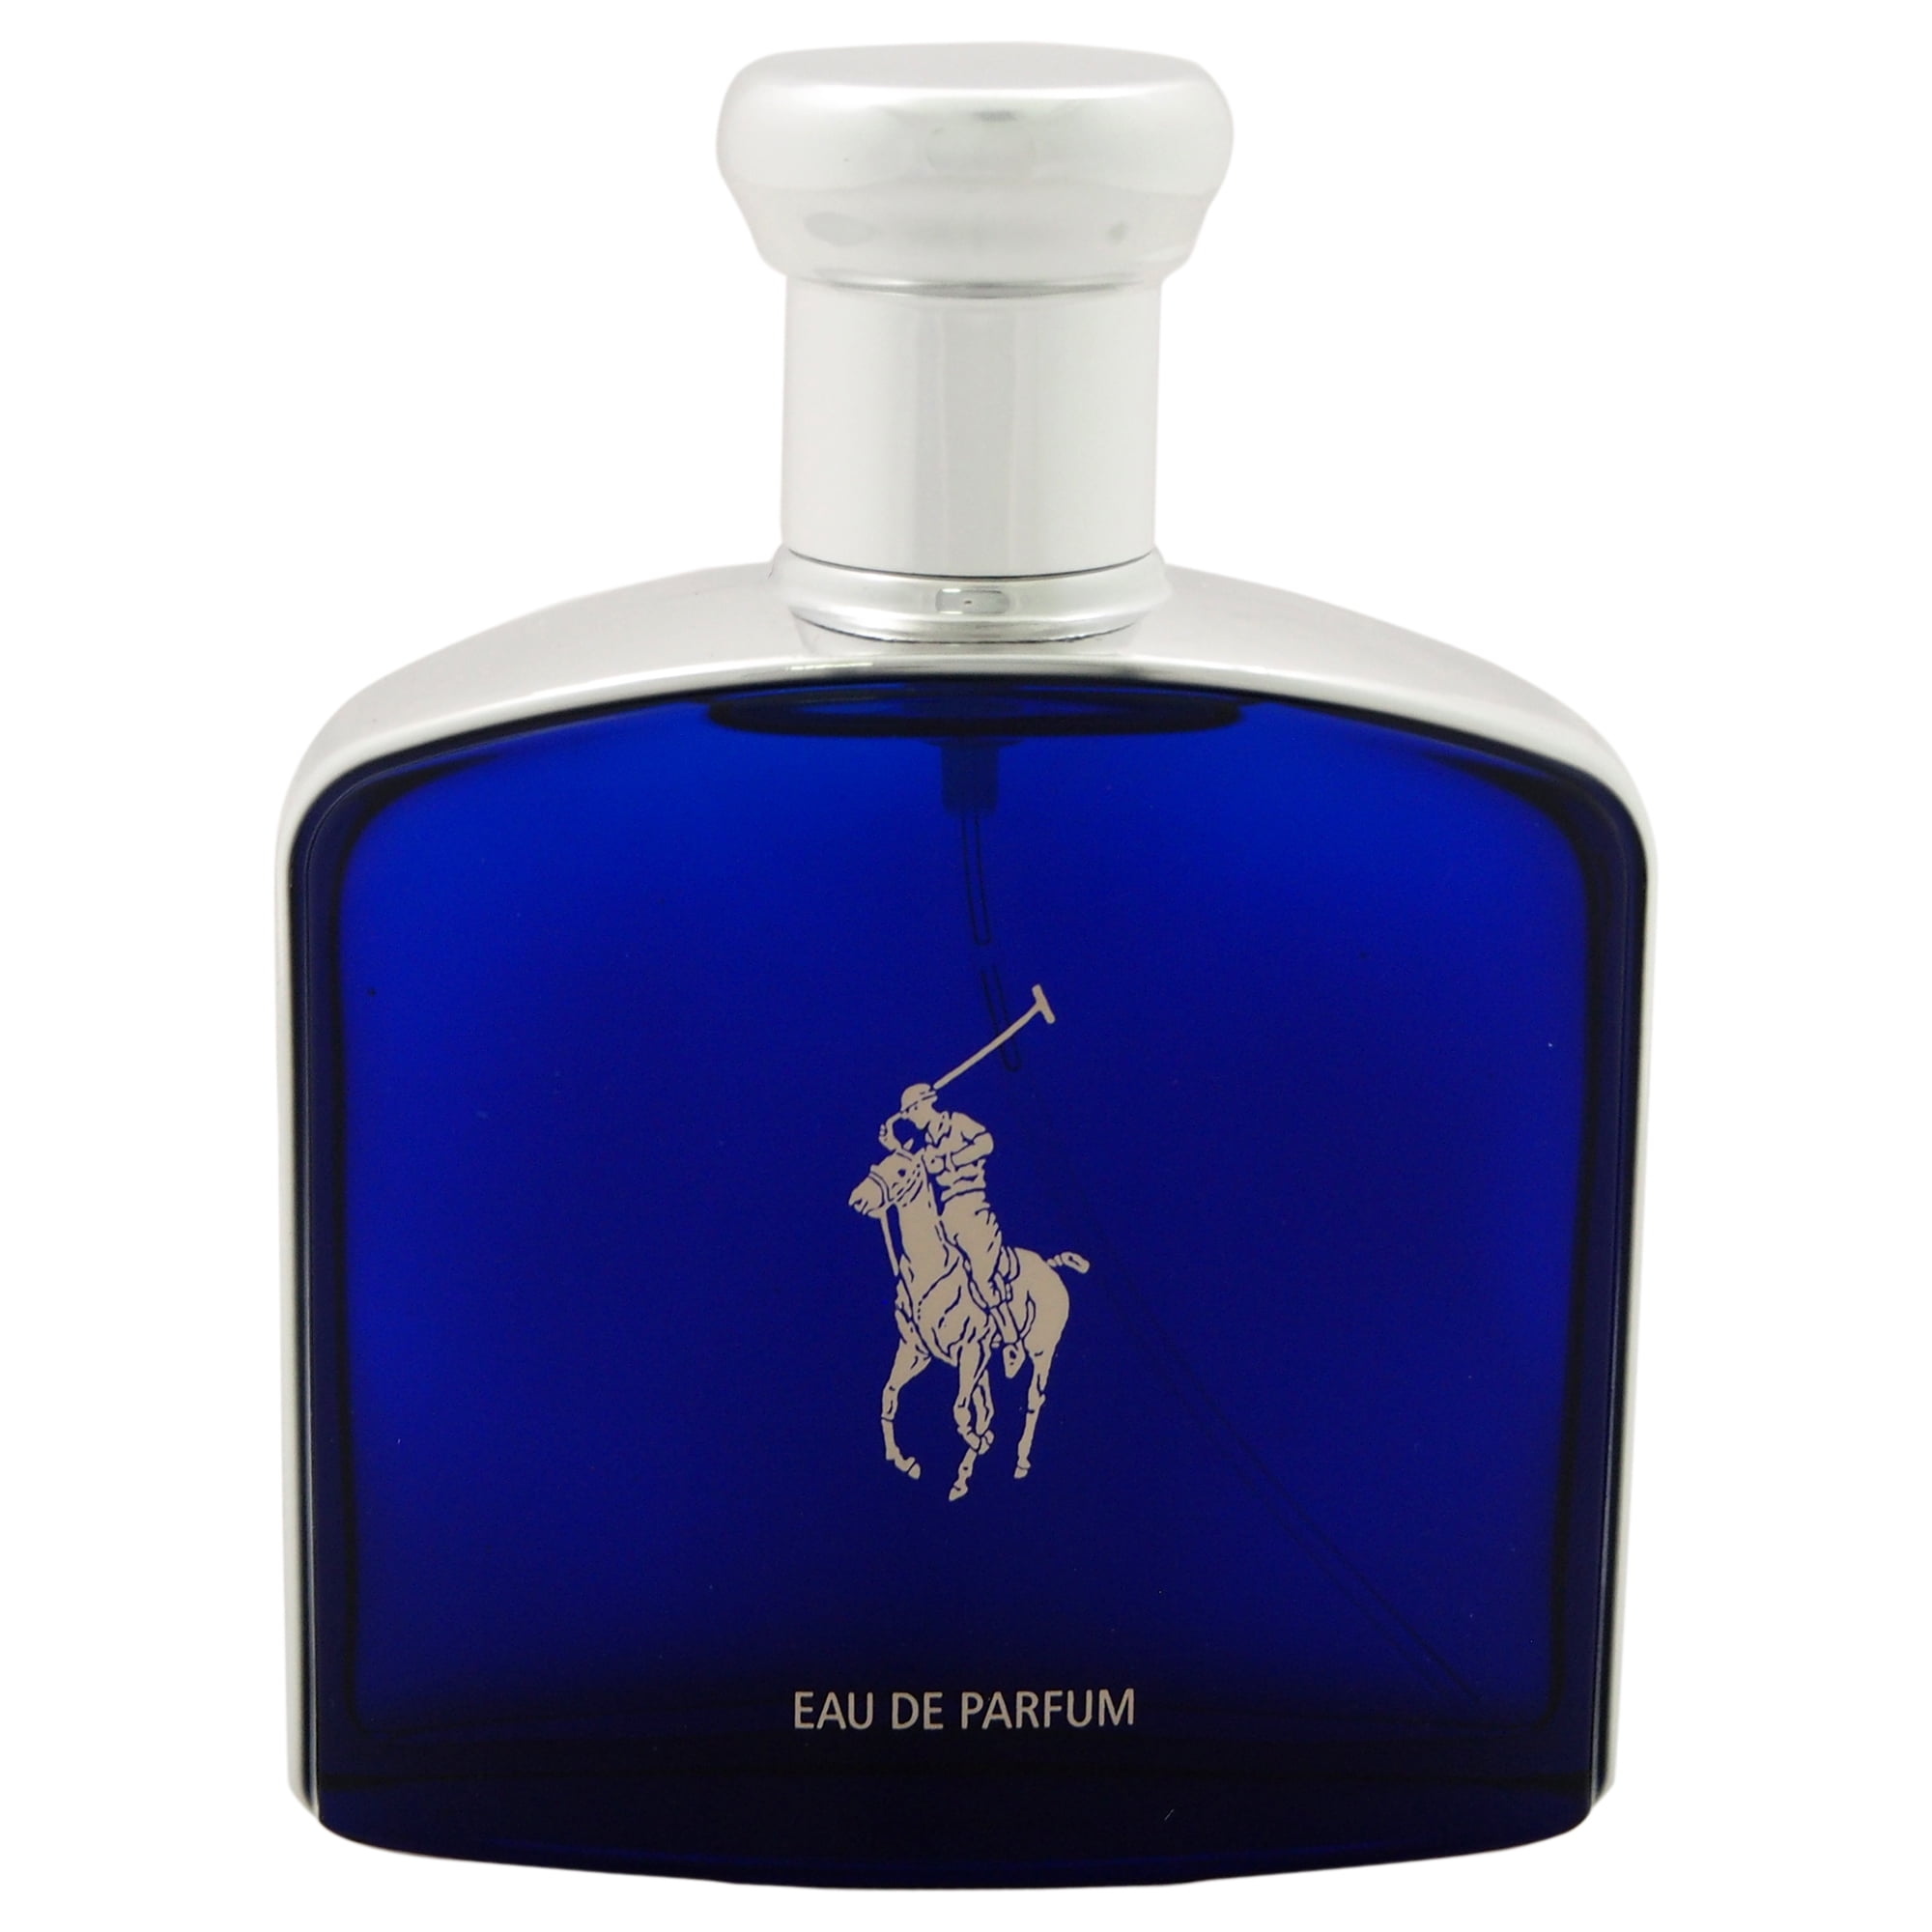 polo blue perfum